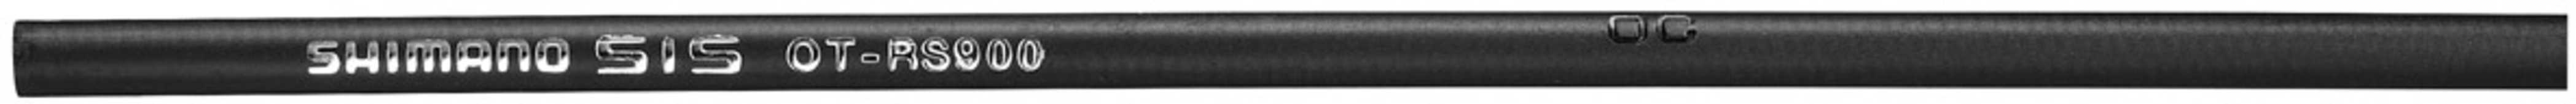 Växelvajerset Shimano Dura-Ace Rs900 svart